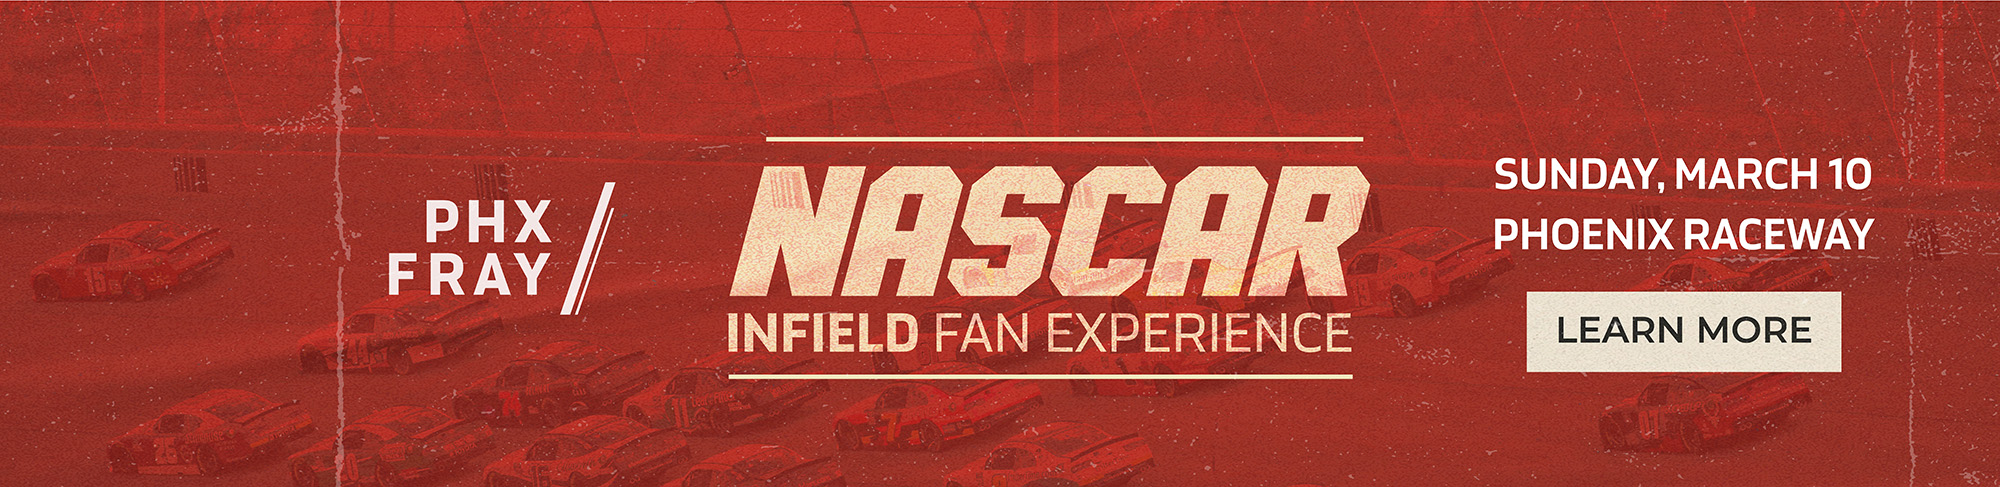 PHX Fray NASCAR Infield Fan Experience